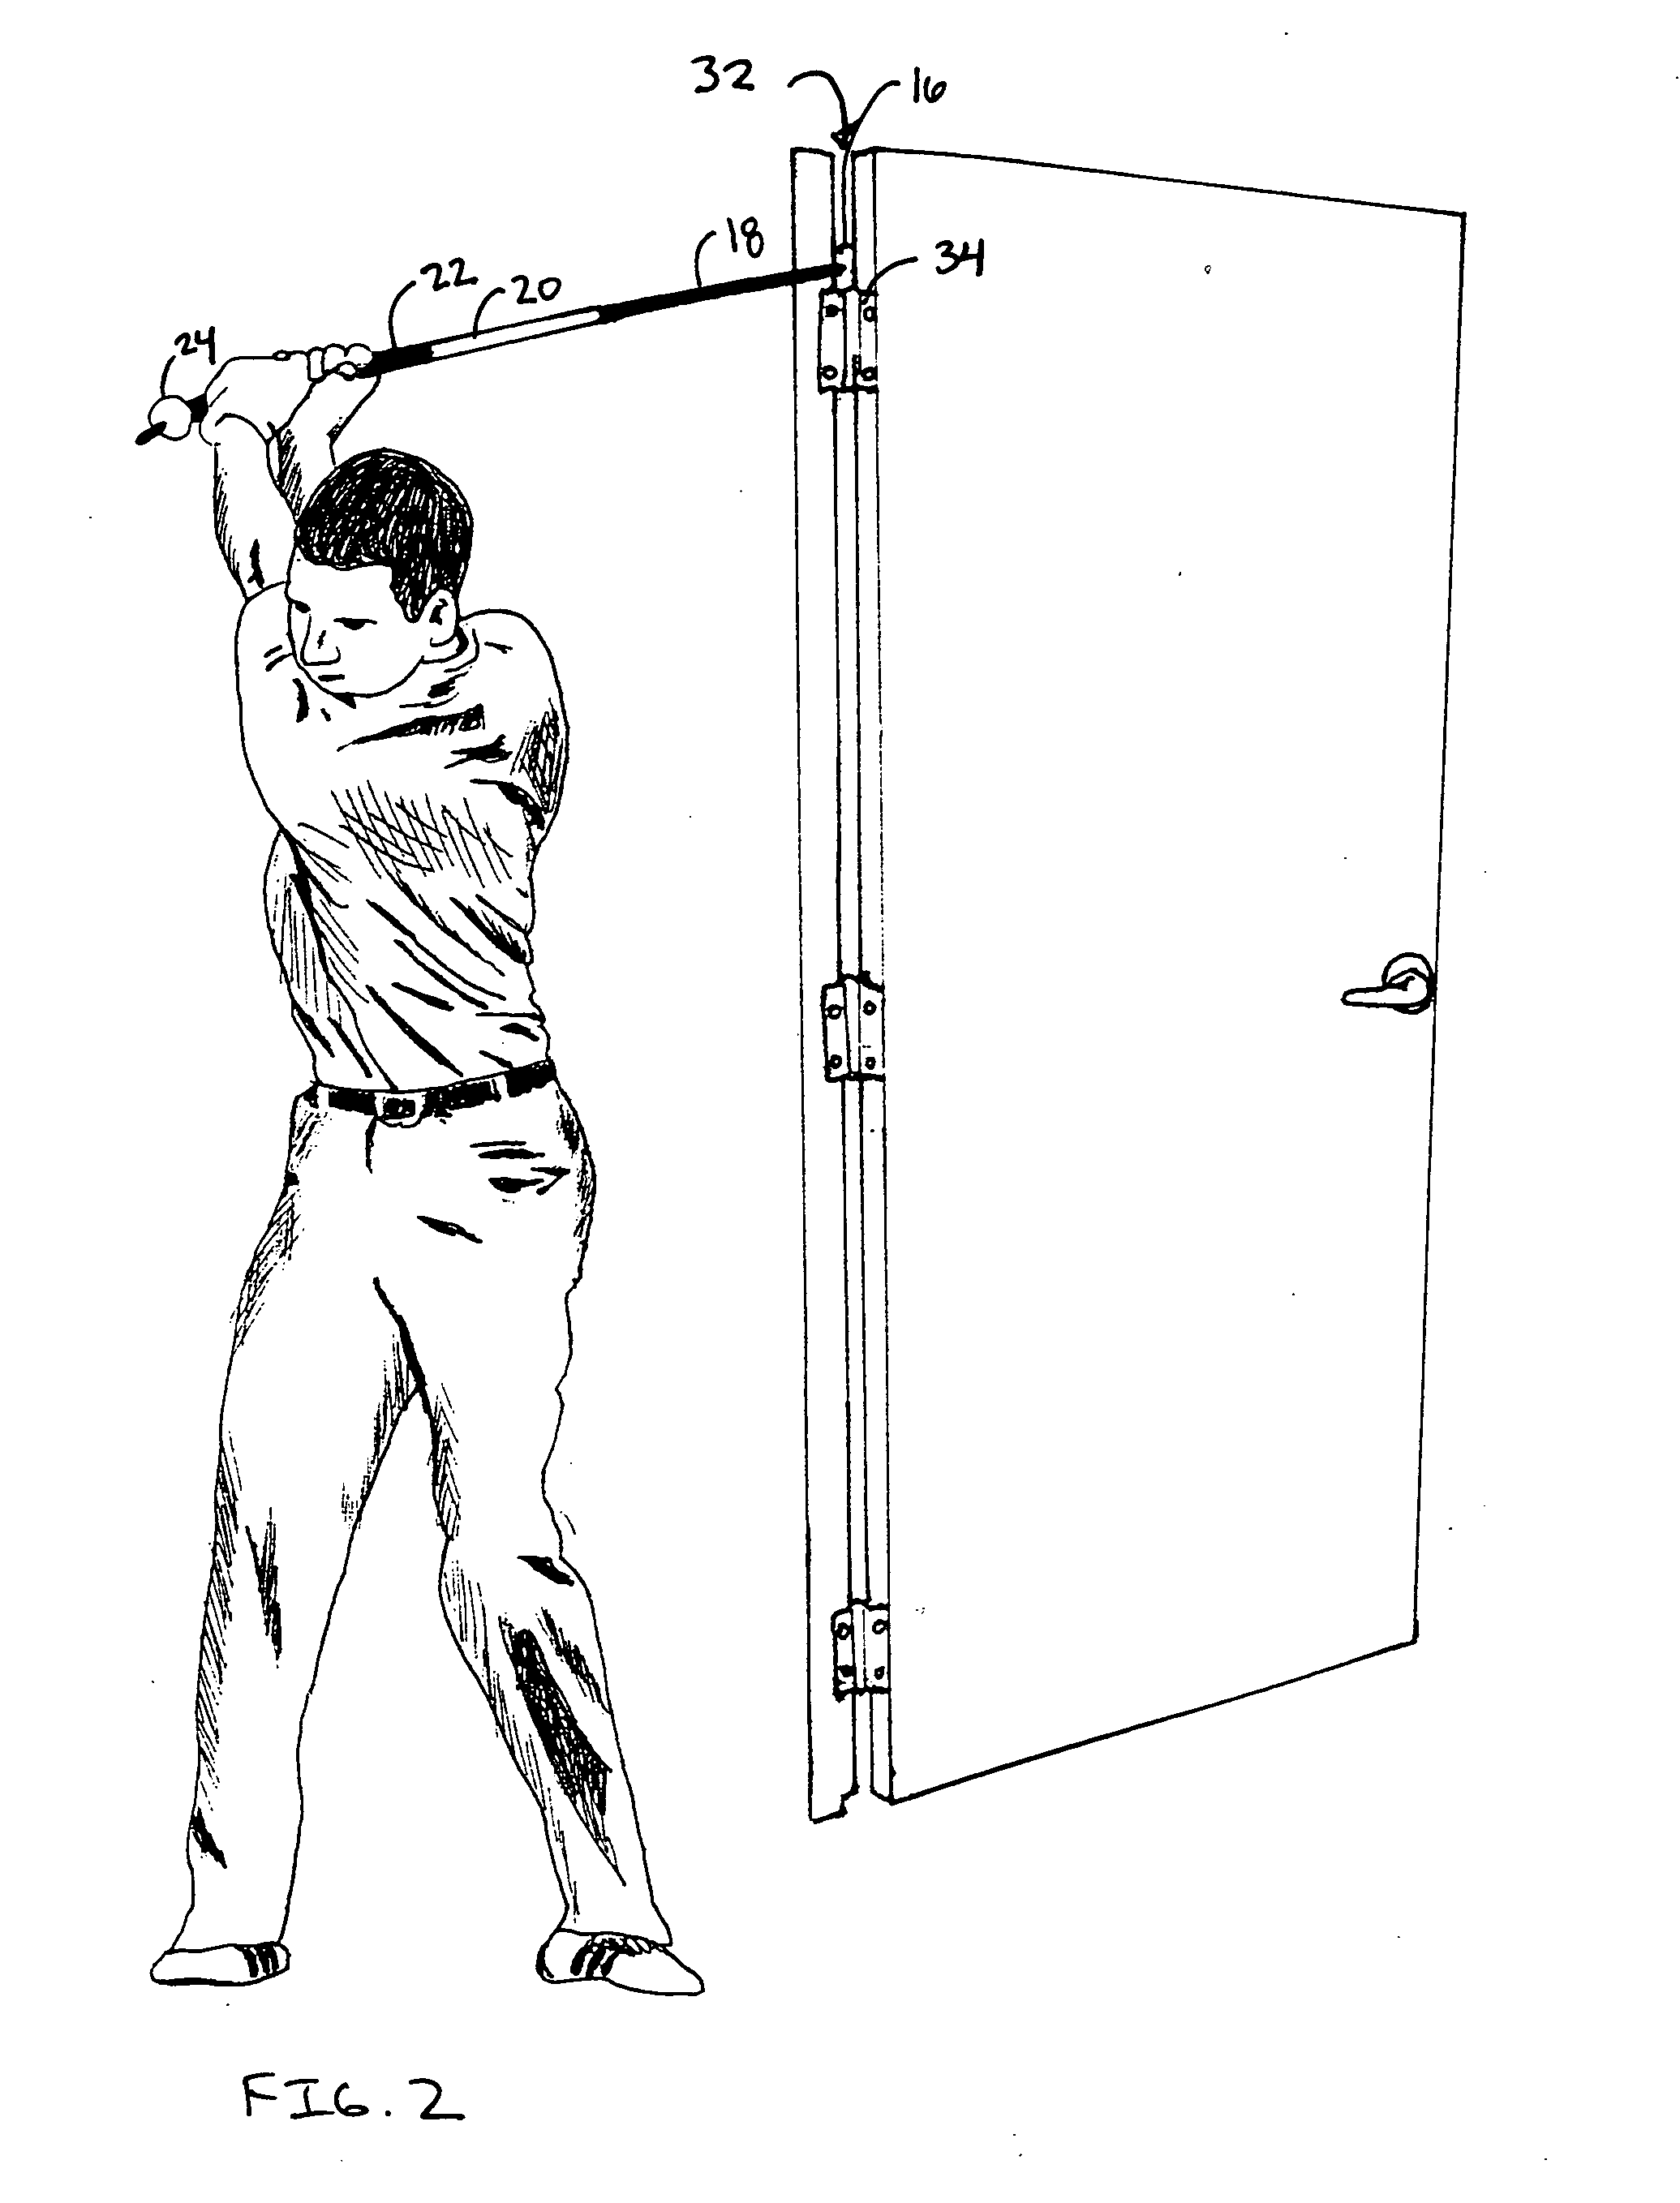 Golf swing training device